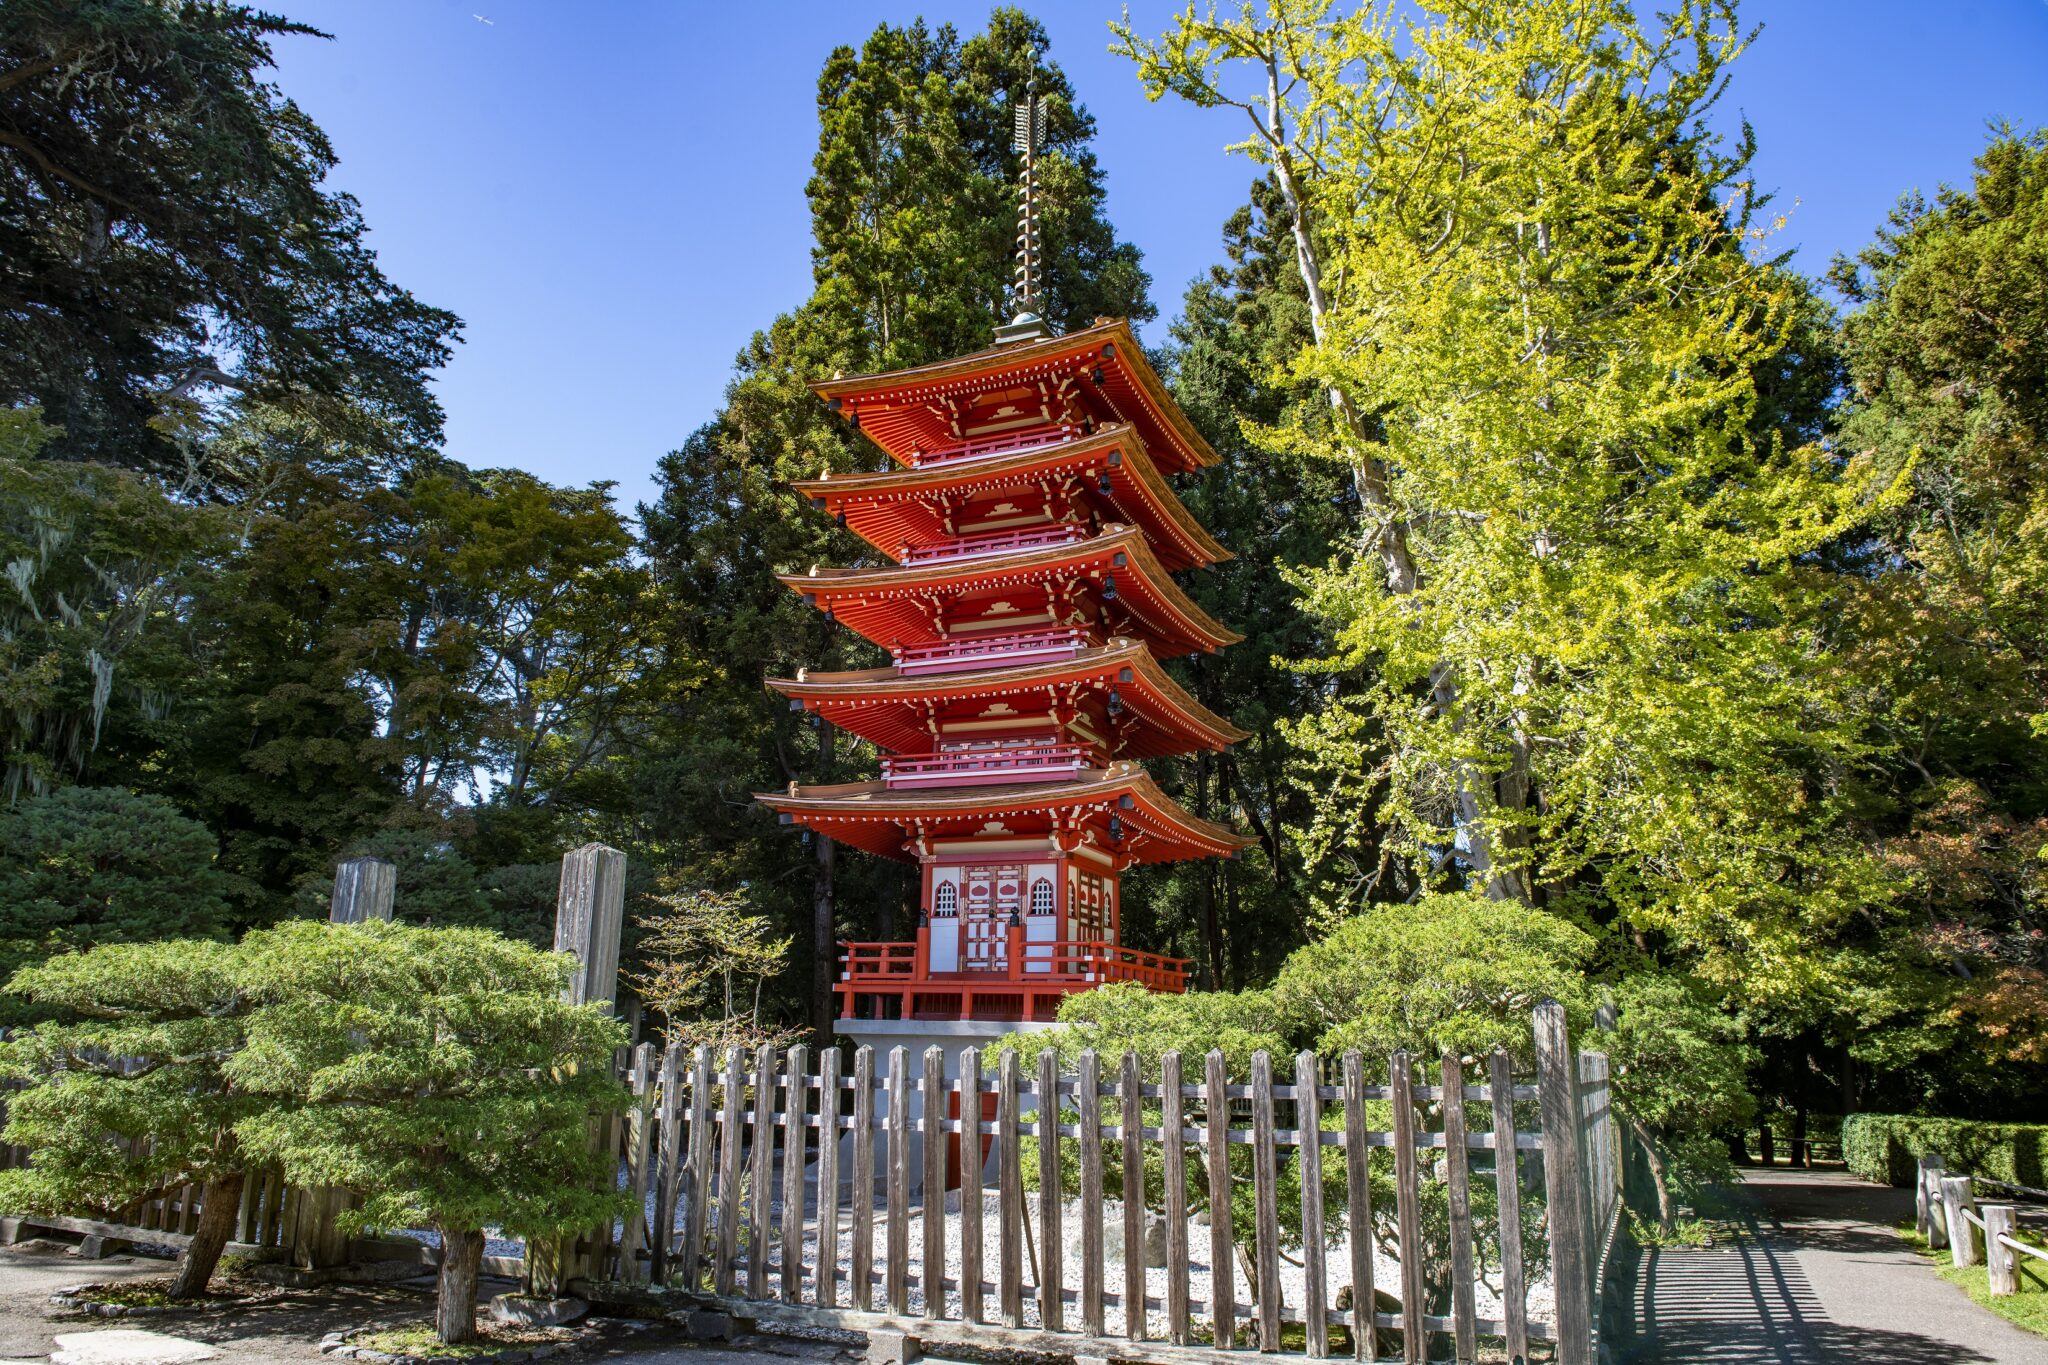 japanese tea garden tours